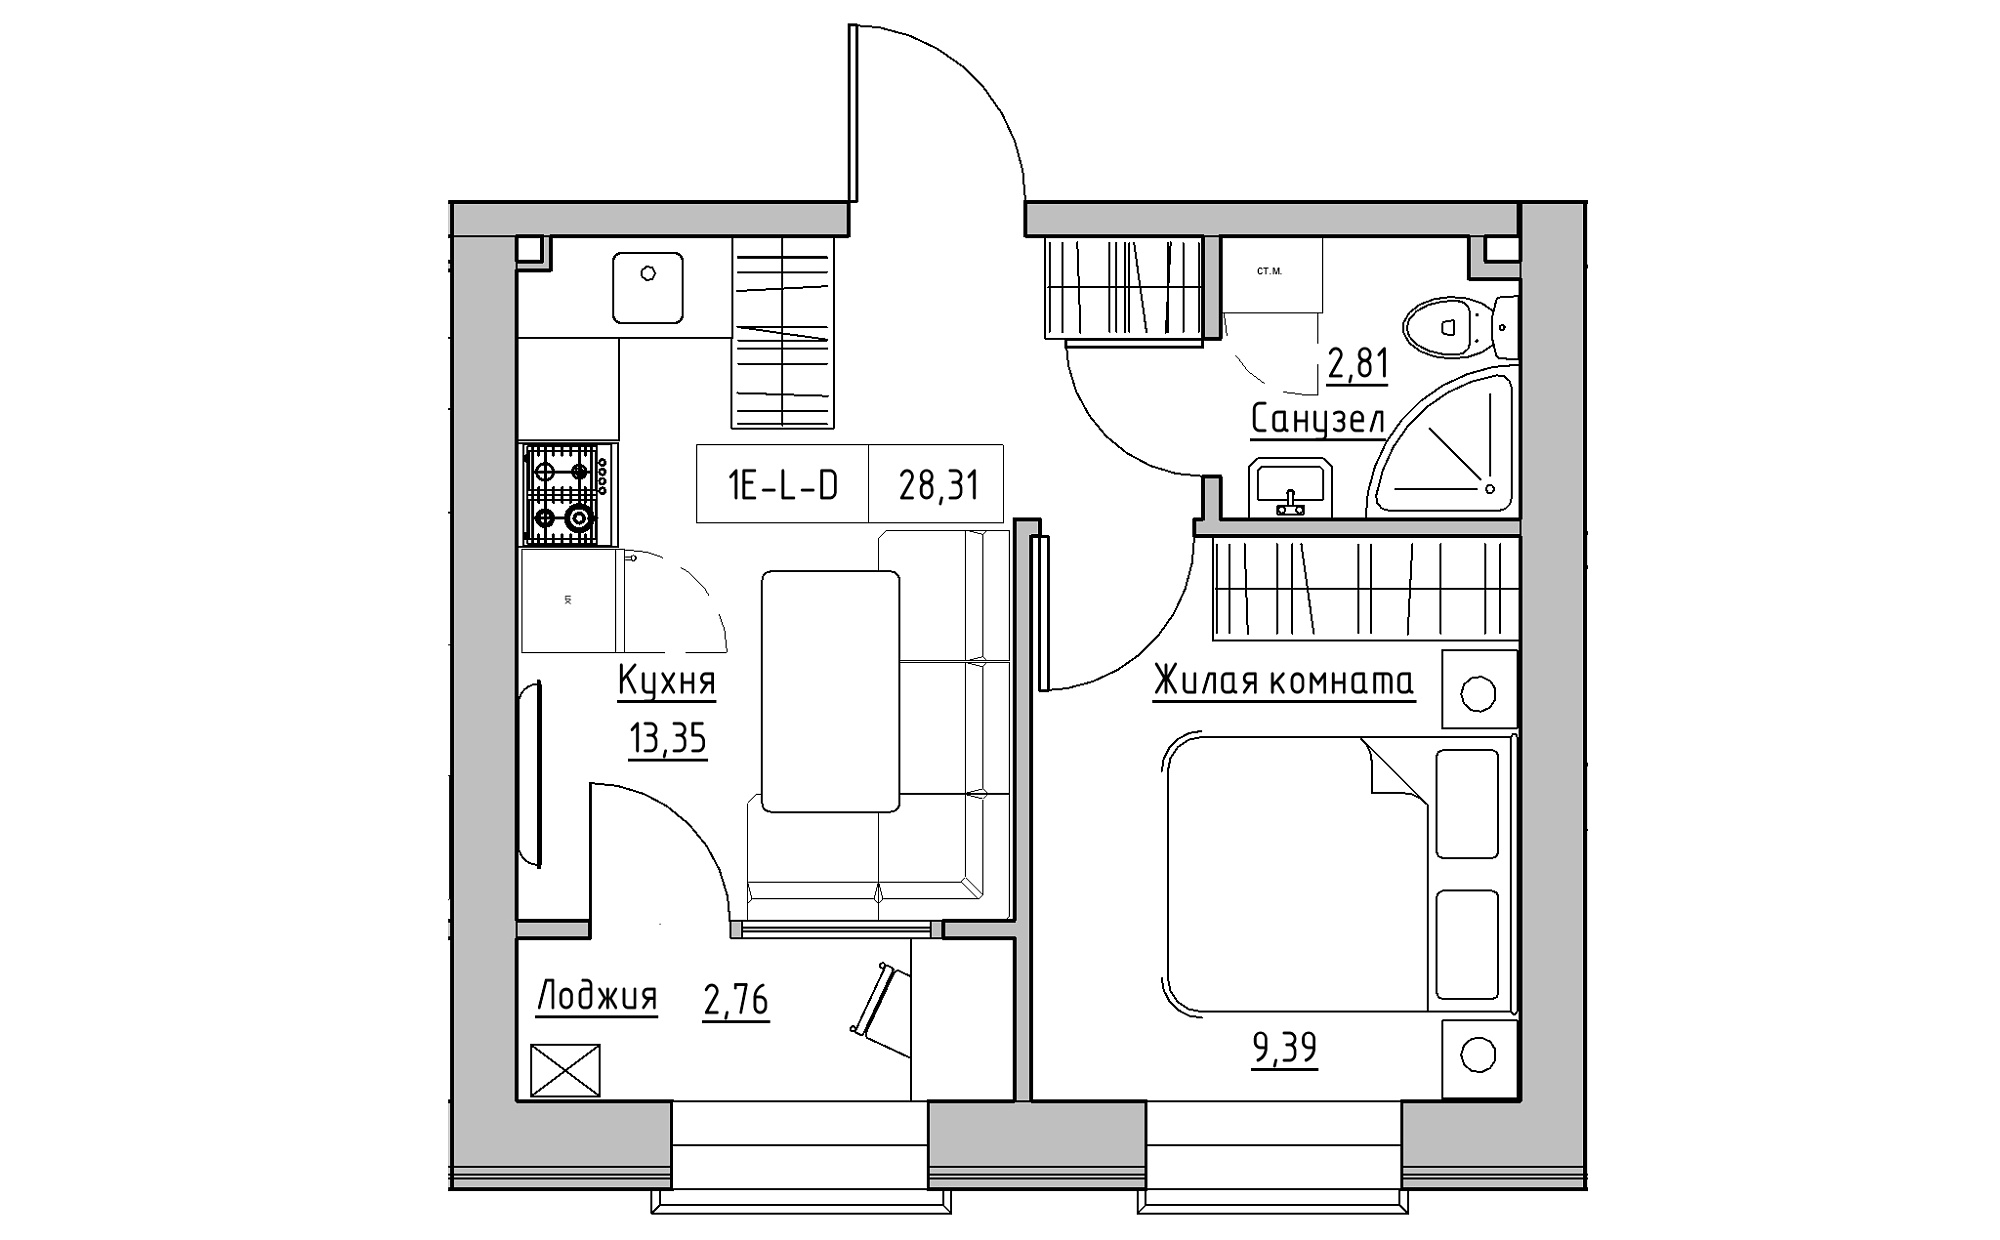 Planning 1-rm flats area 28.31m2, KS-022-01/0001.